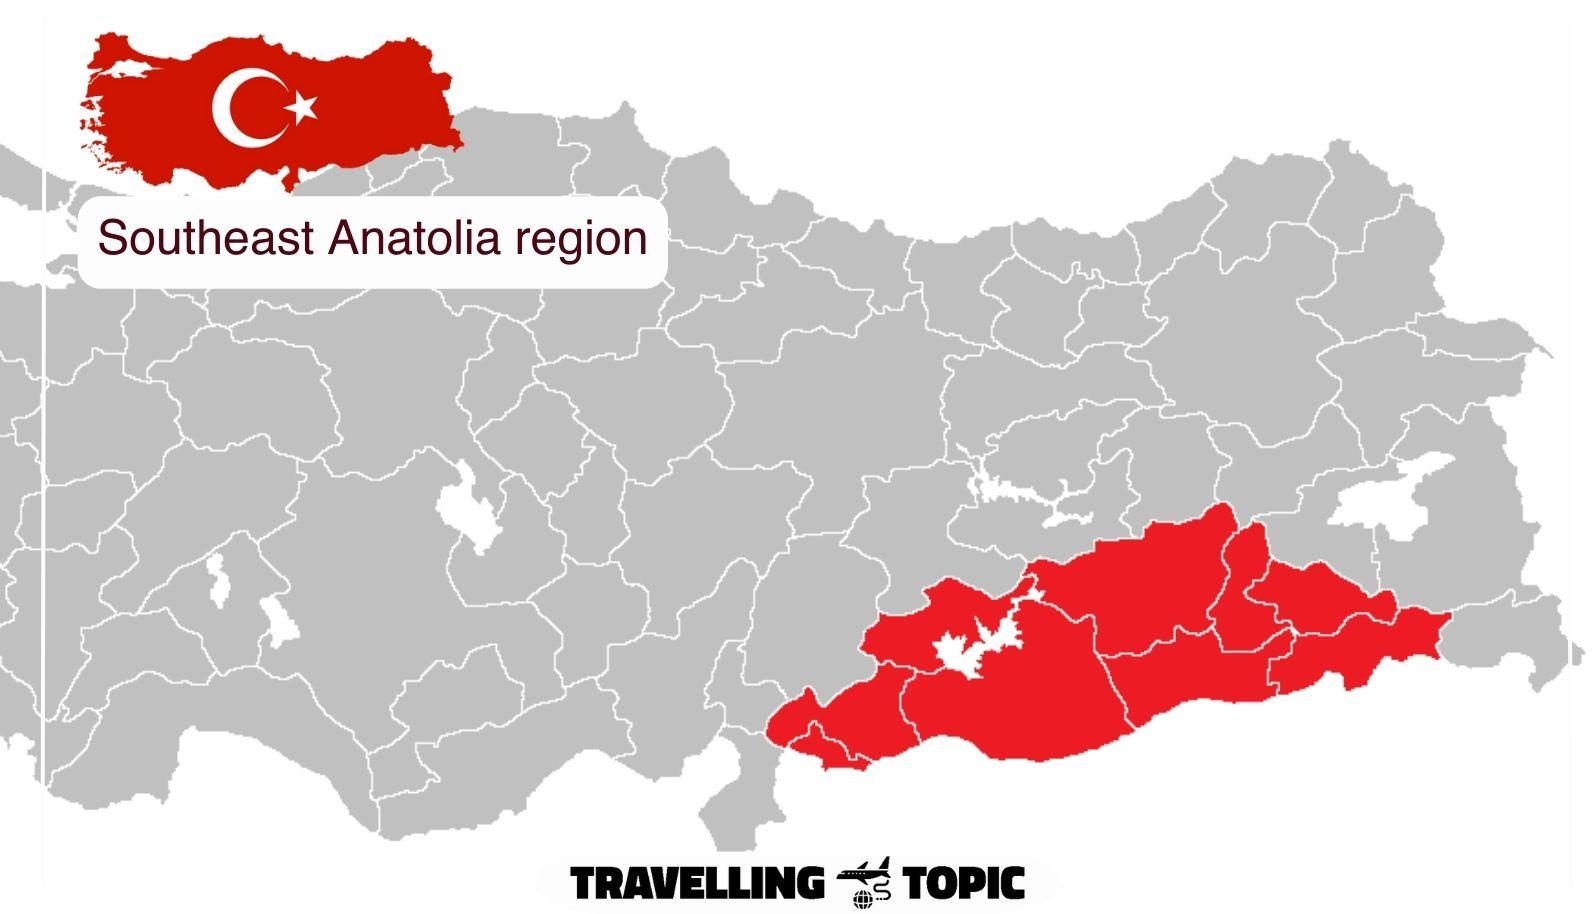 Southeast Anatolia region